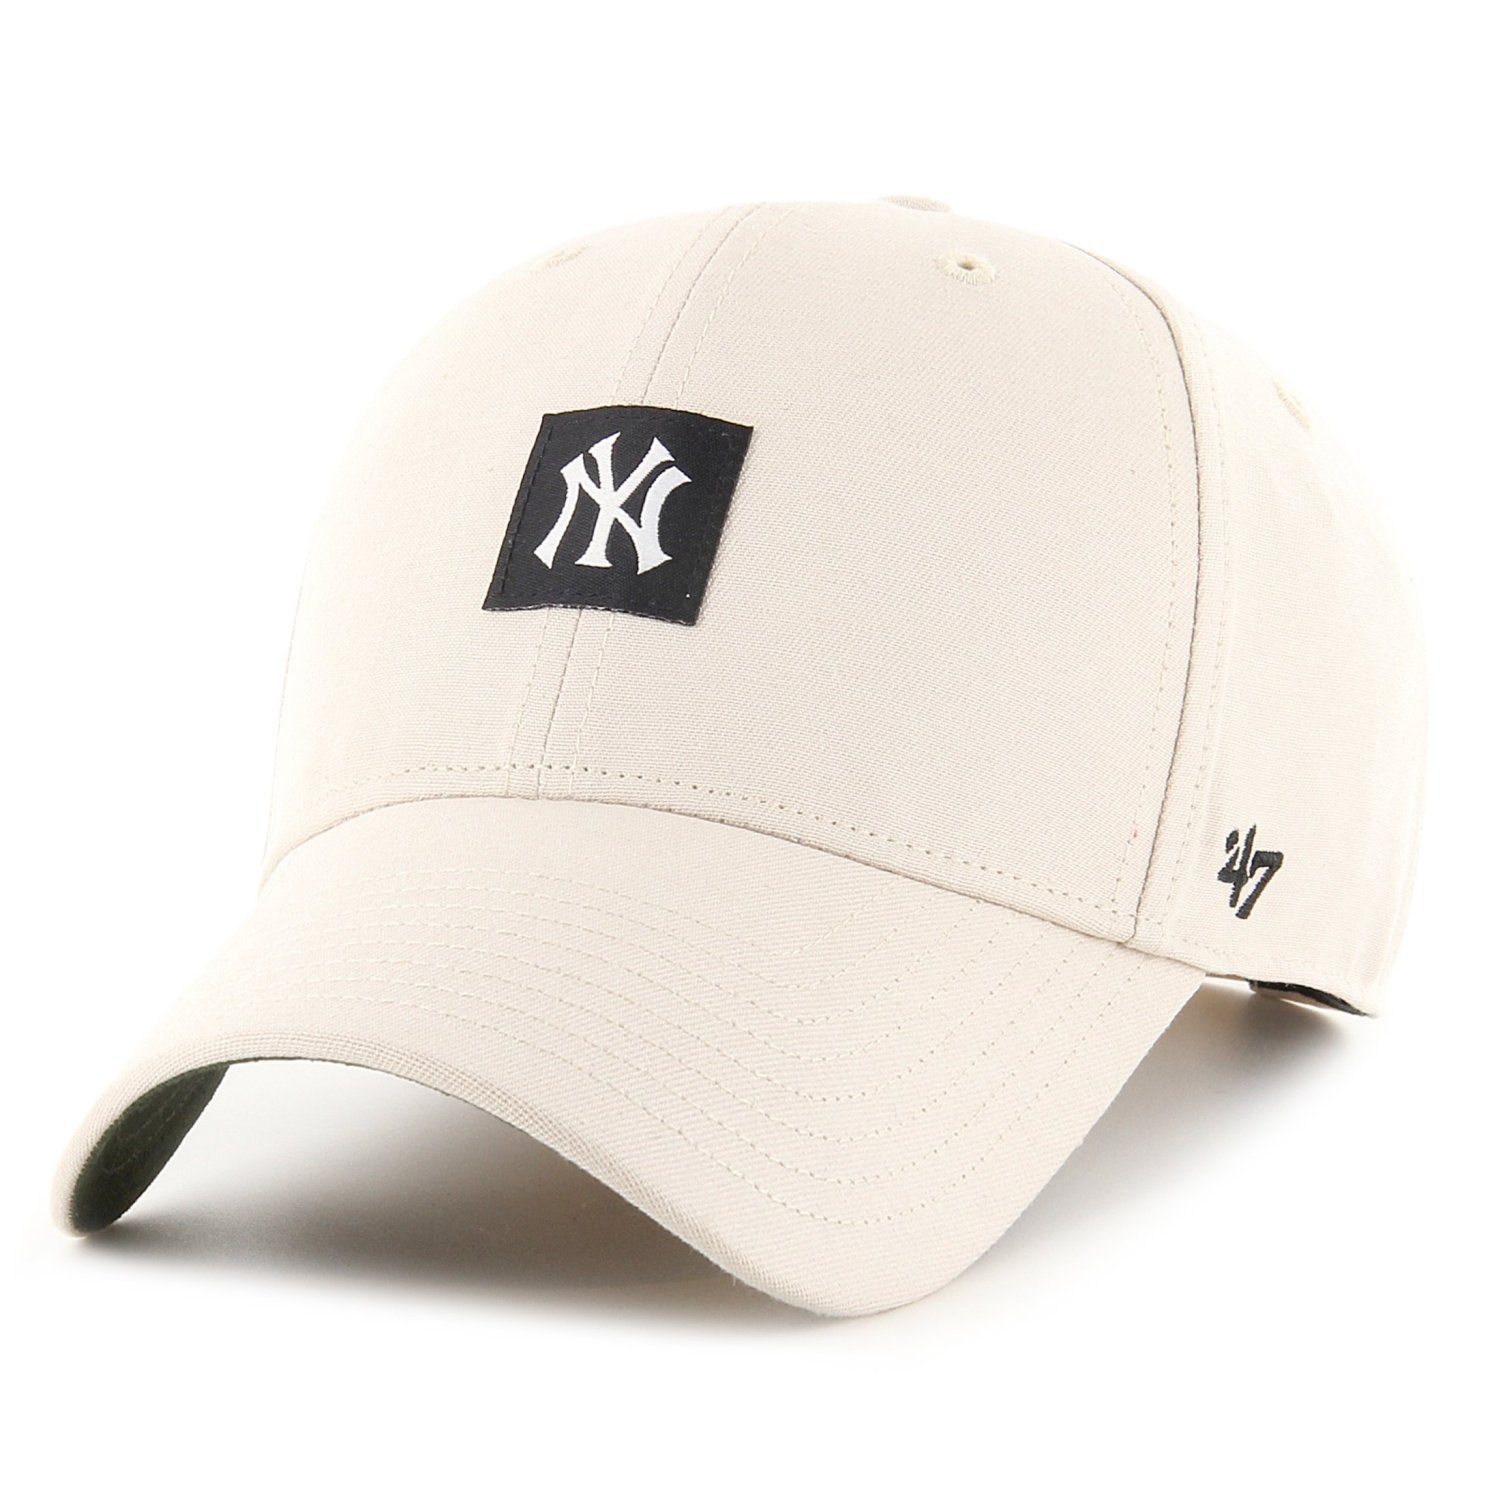 '47 Brand Yankees bone York New Trucker Curved Cap MLB